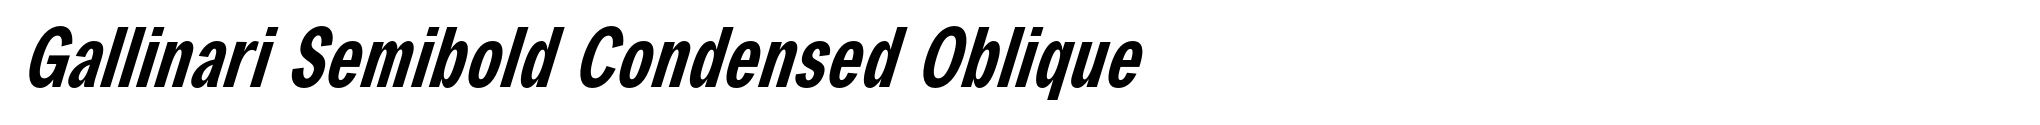 Gallinari Semibold Condensed Oblique image